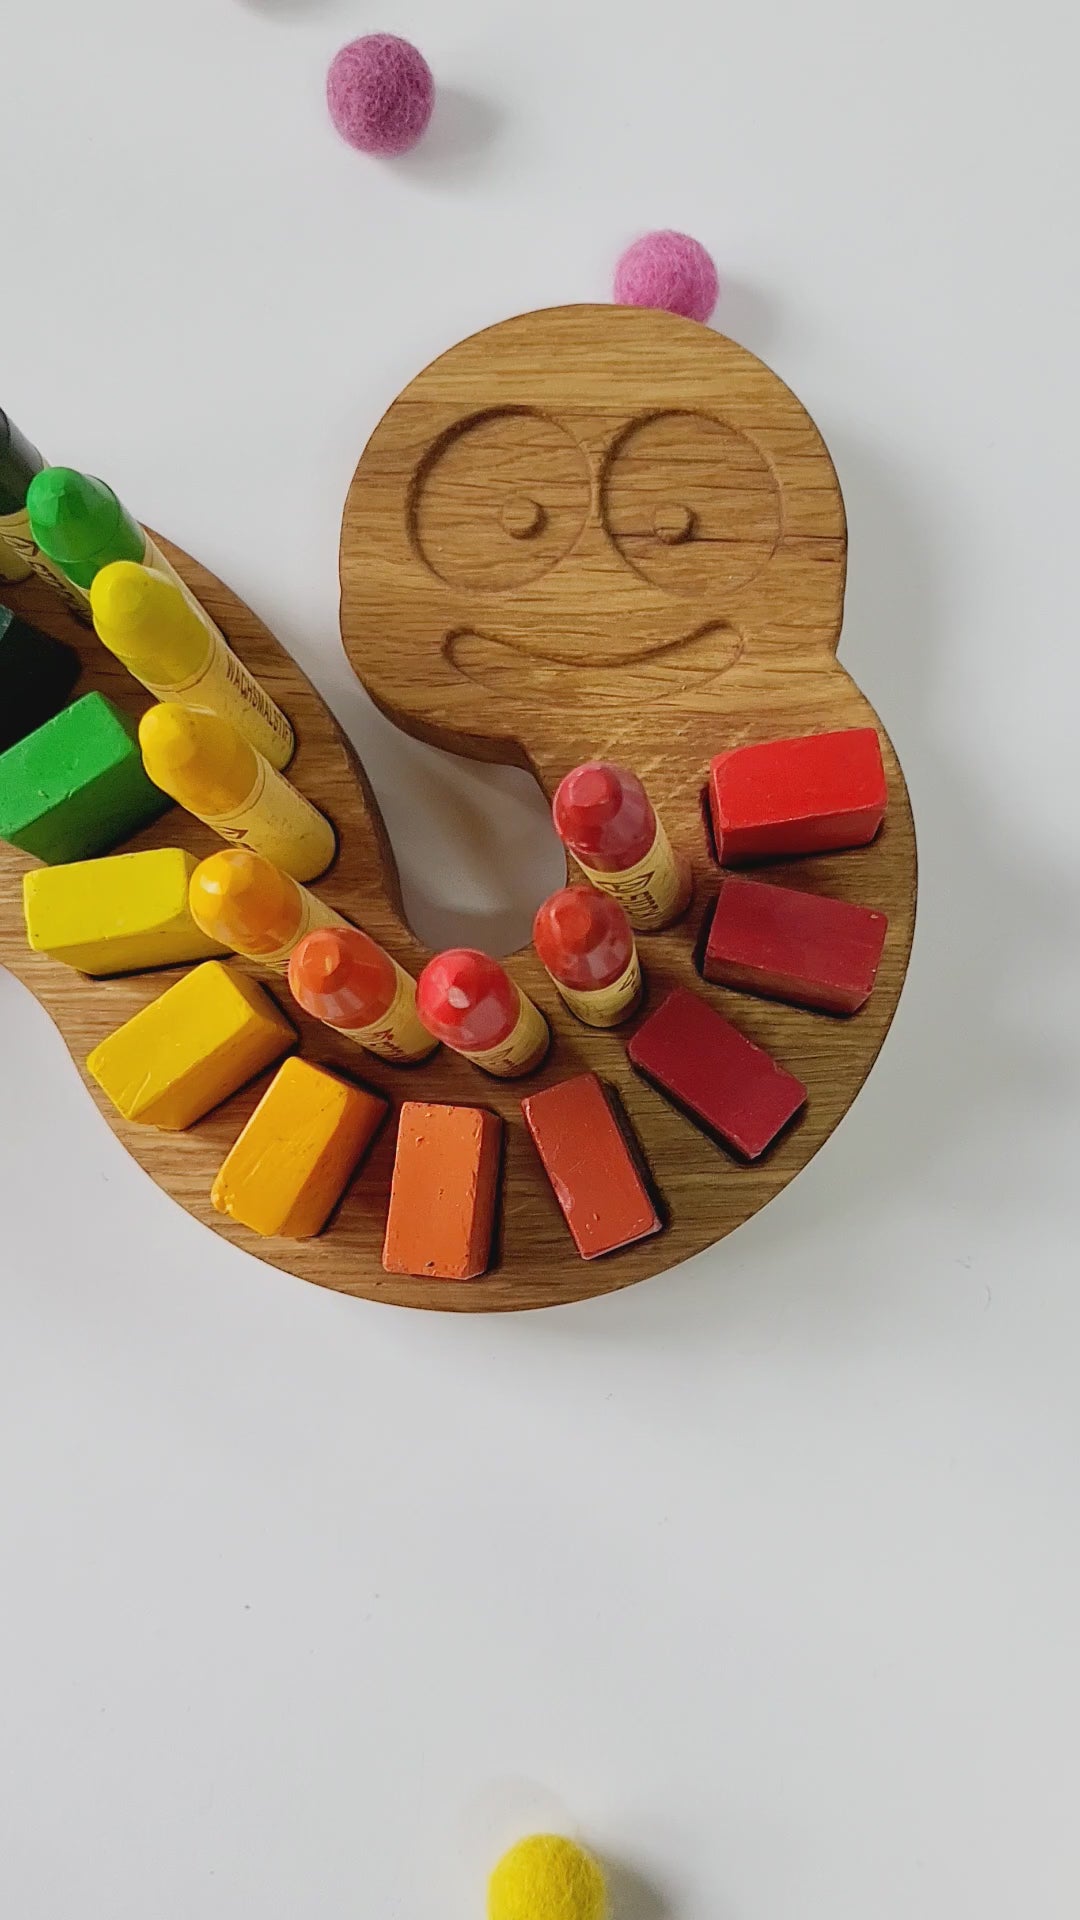 Stockmar Crayon Holder  24 blocks and 24 sticks Caterpillar shape Art supplies gift for kids desk organization wooden holder without crayons